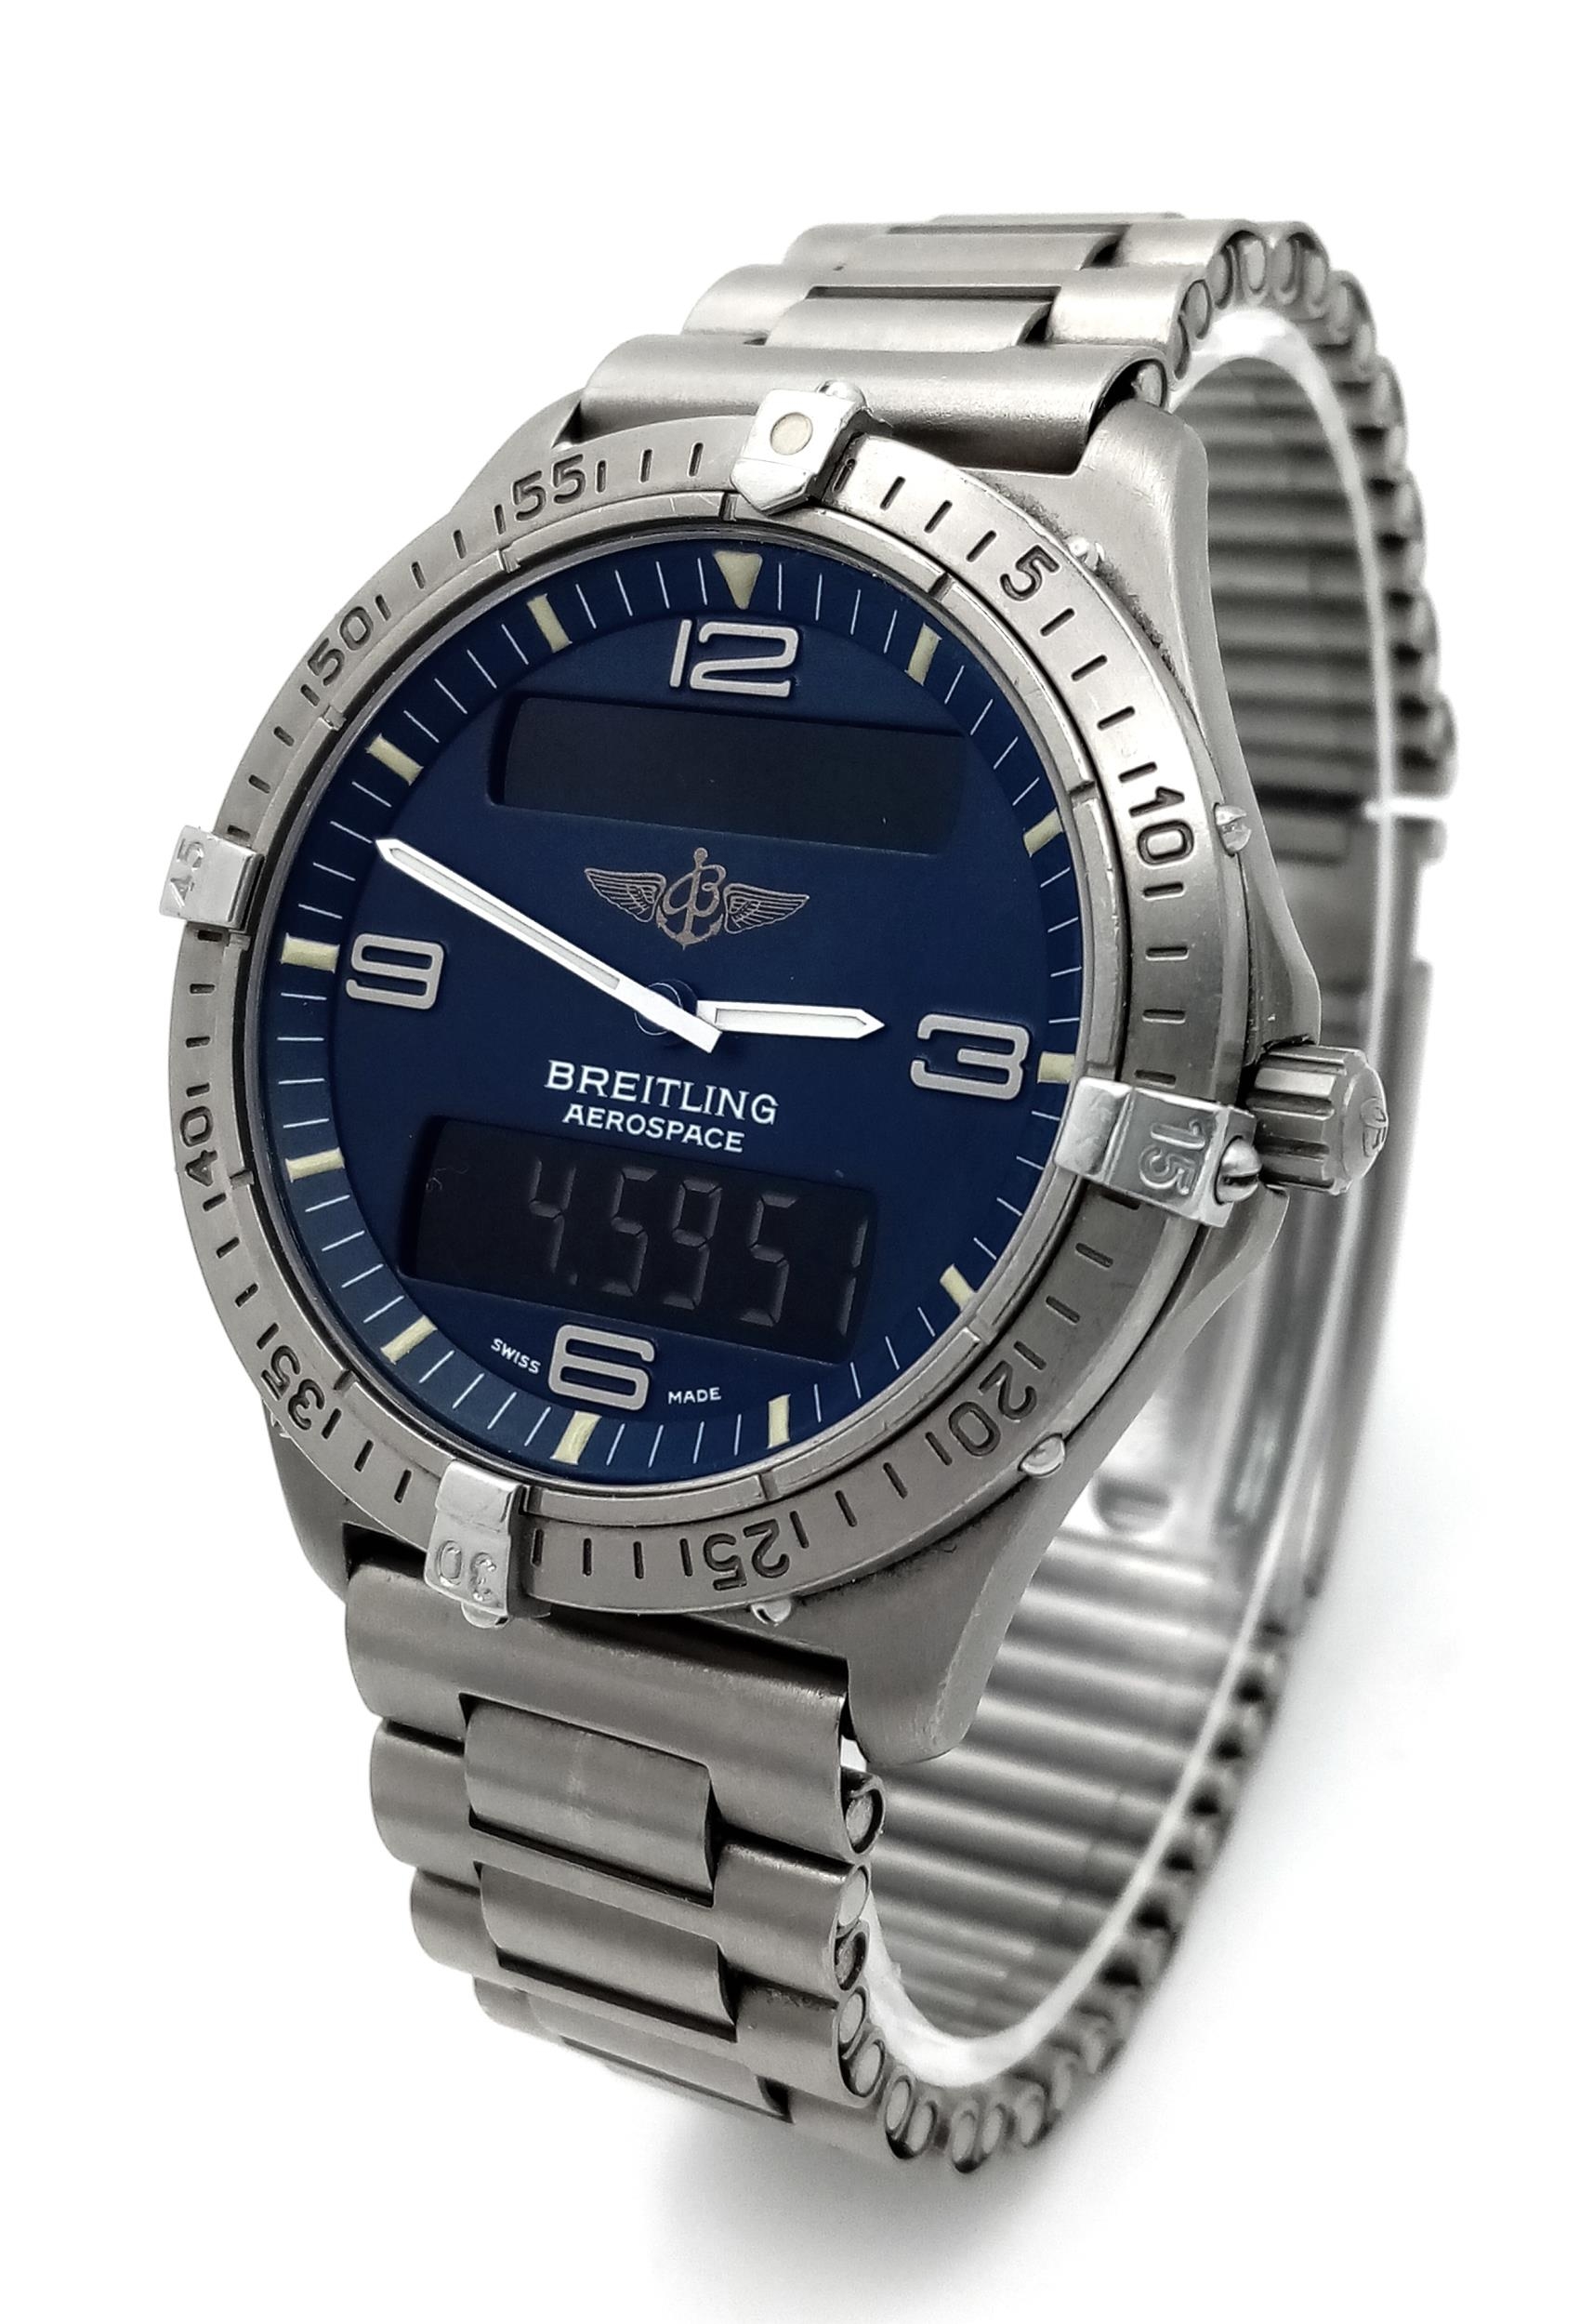 A Breitling E56062 Aerospace Quartz Pilots Watch. Titanium bracelet and case - 40mm. Blue dial